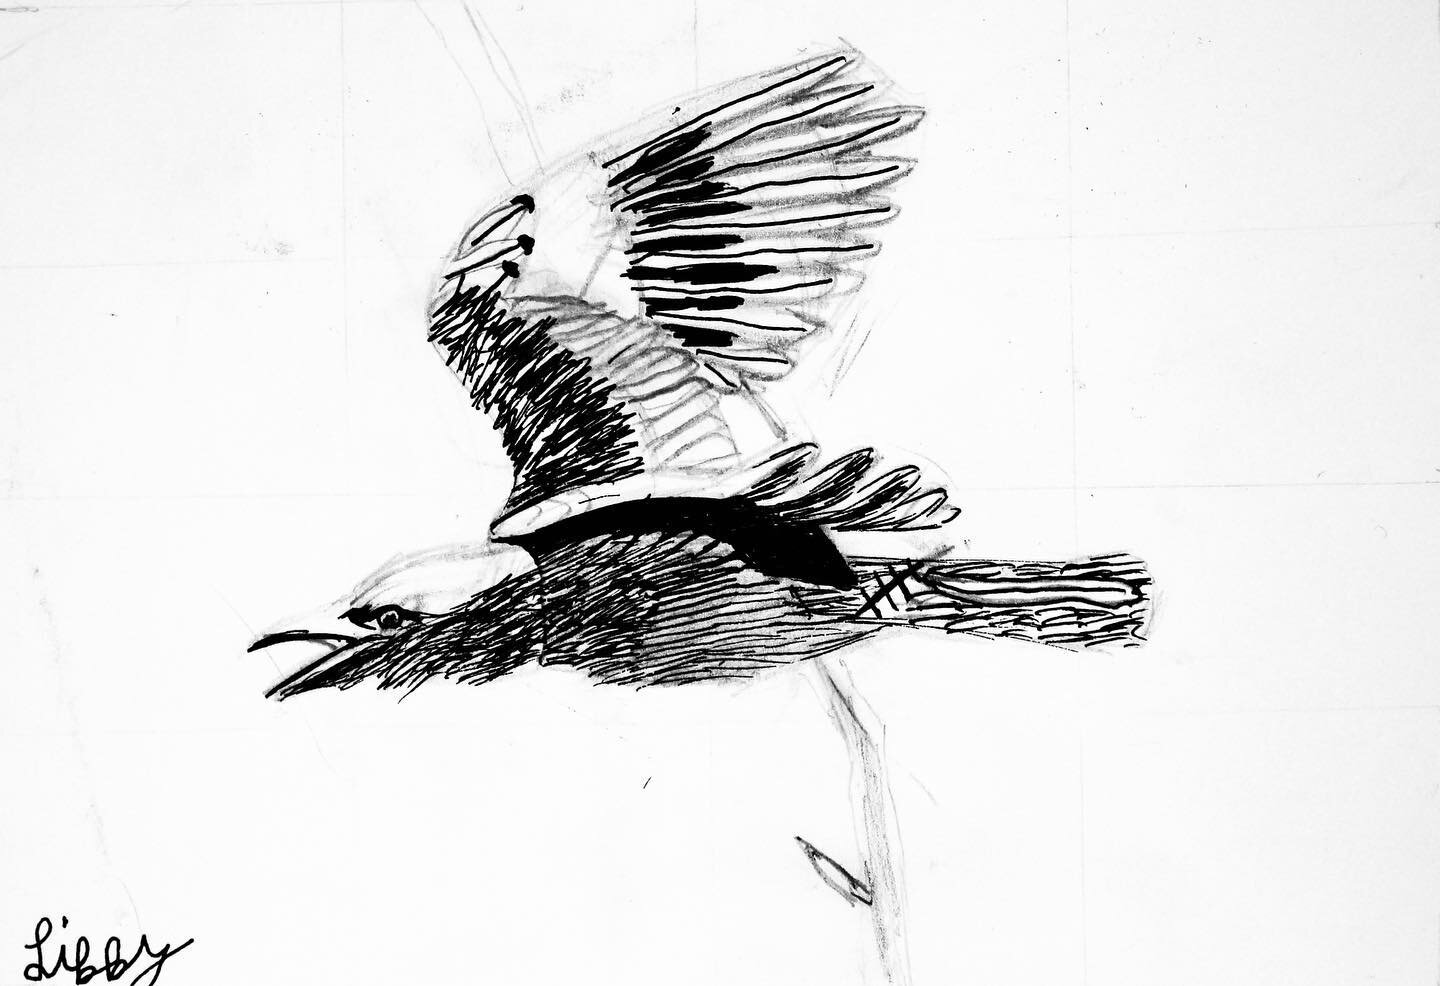 &ldquo;Fly Fly Fly Bird!&rdquo; Pen Drawing
Artist: Libby Driggs, age 9
.
.
.
#pen #pendrawing #drawing #penandink #penandinkdrawing #instaart #art #artclass #artstudent #utahart #utahartist #sydneybowmanartclass #flybird #birdflying #bird #flying